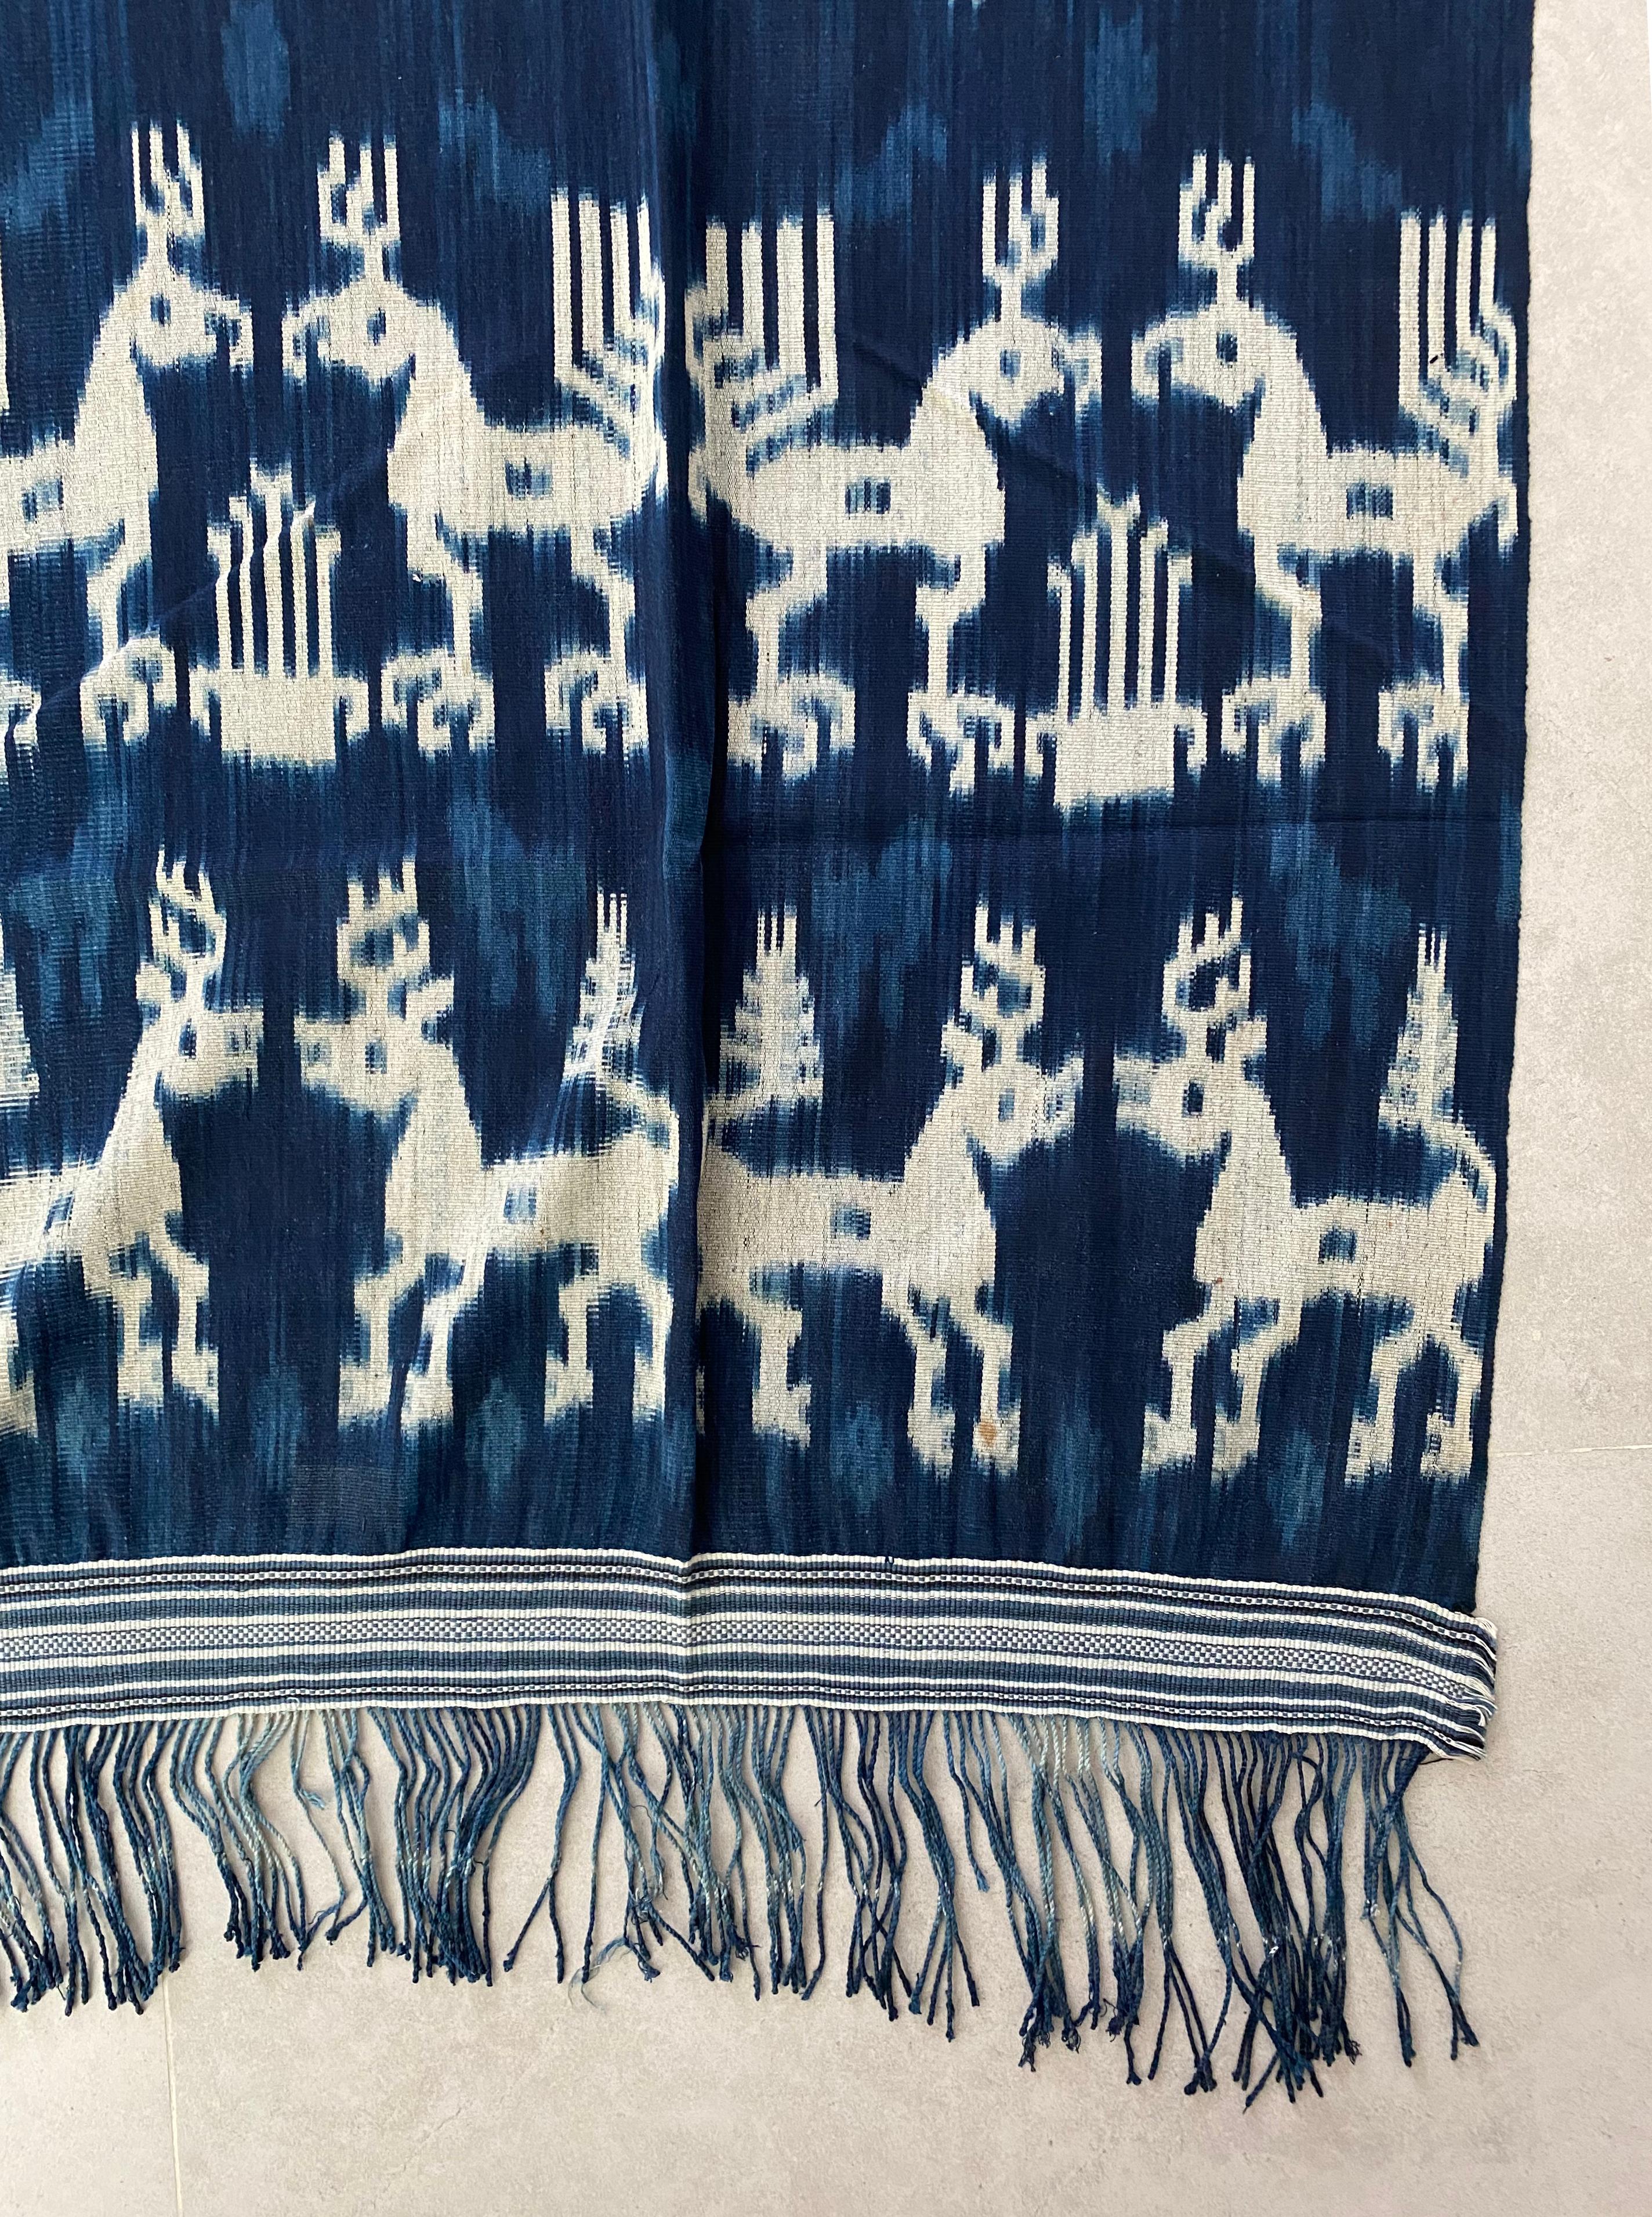 Yarn Ikat Textile from Sumba Island, Indonesia